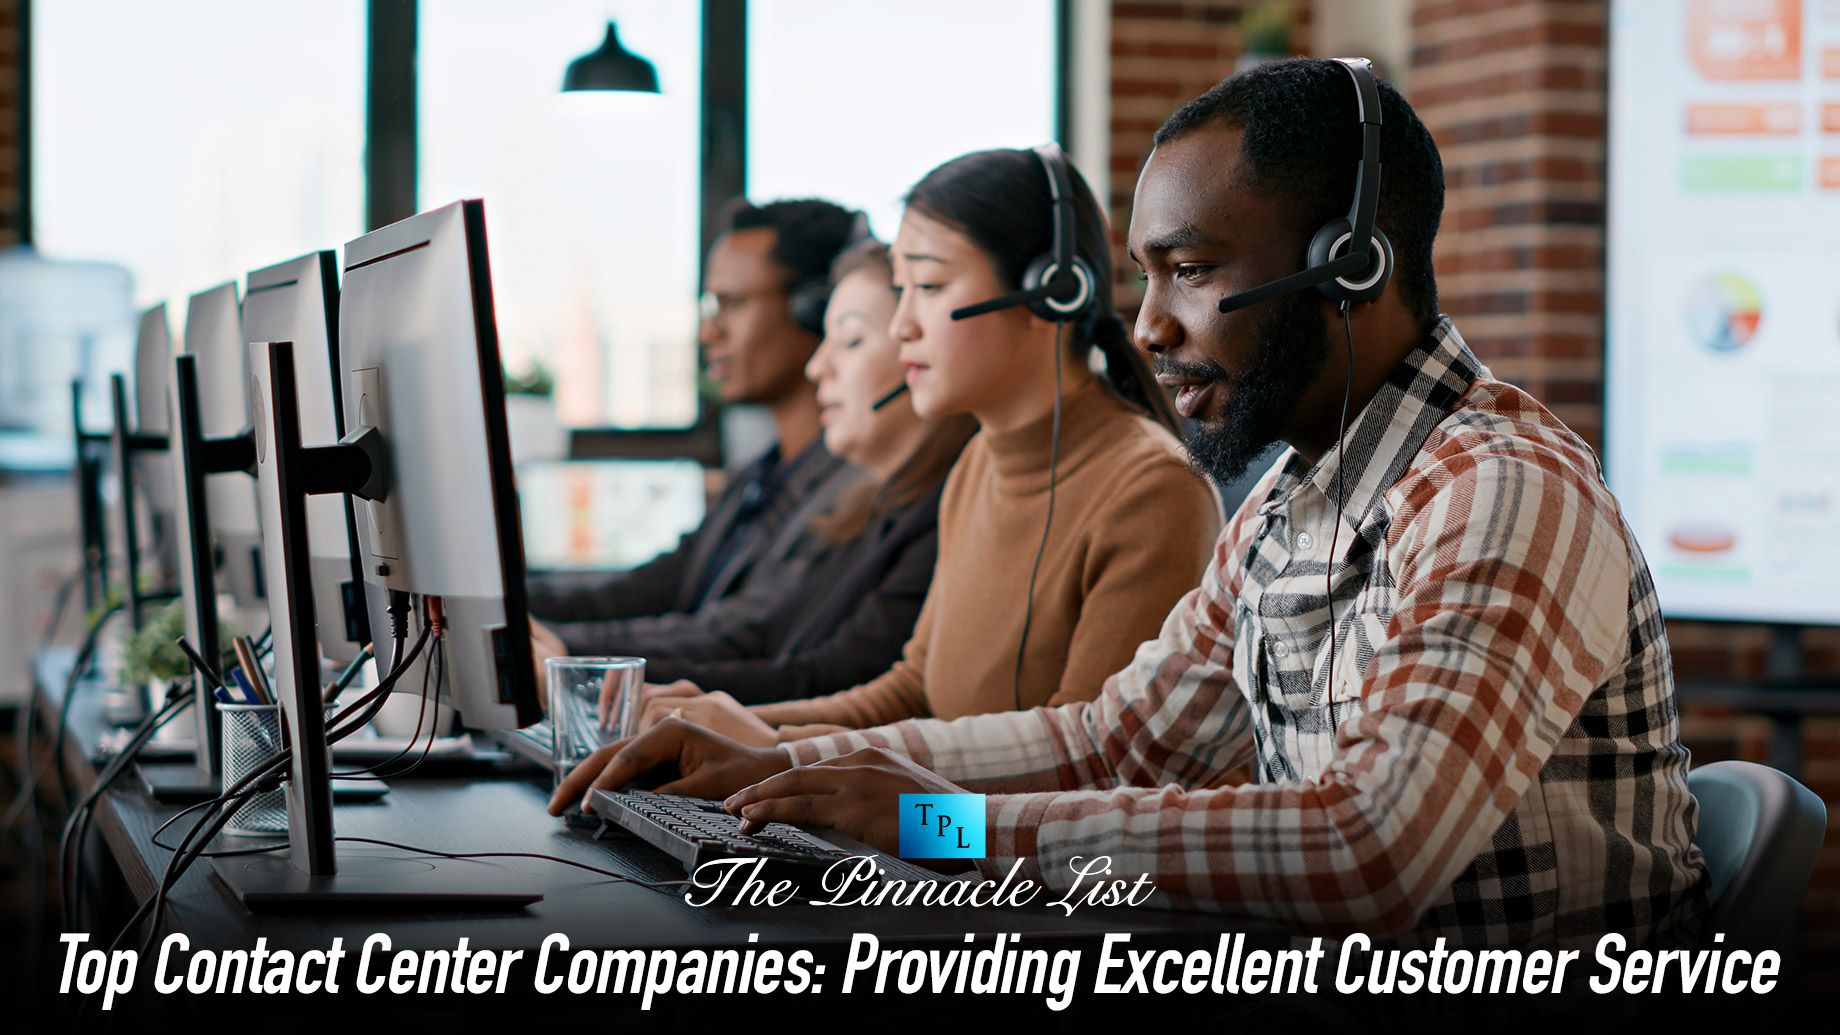 Top Contact Center Companies: Providing Excellent Customer Service